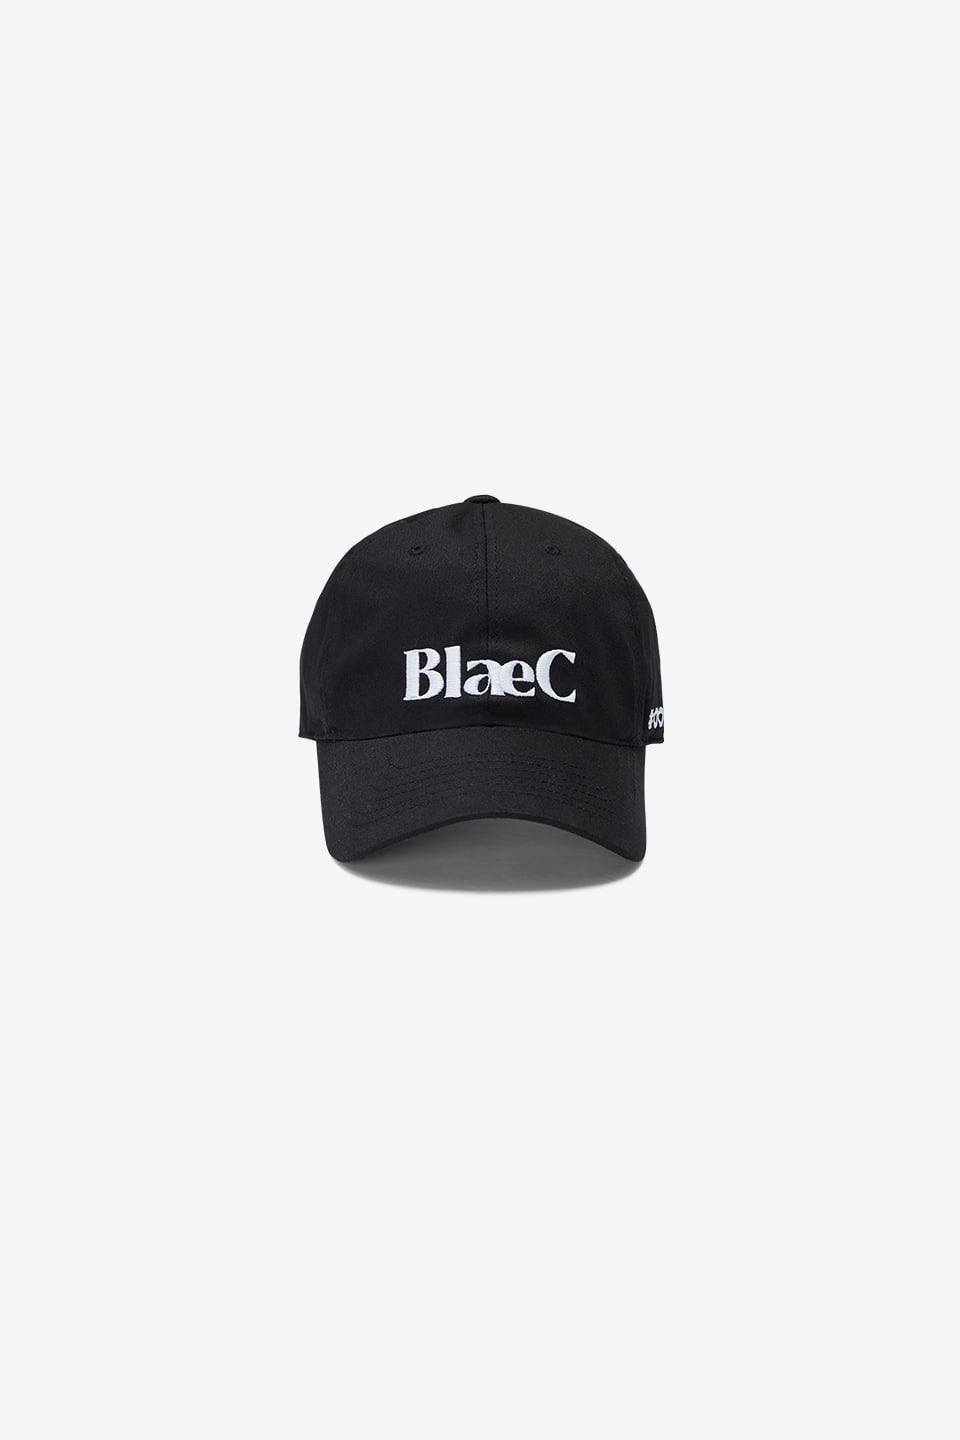 BlaeC Logo BALL CAP